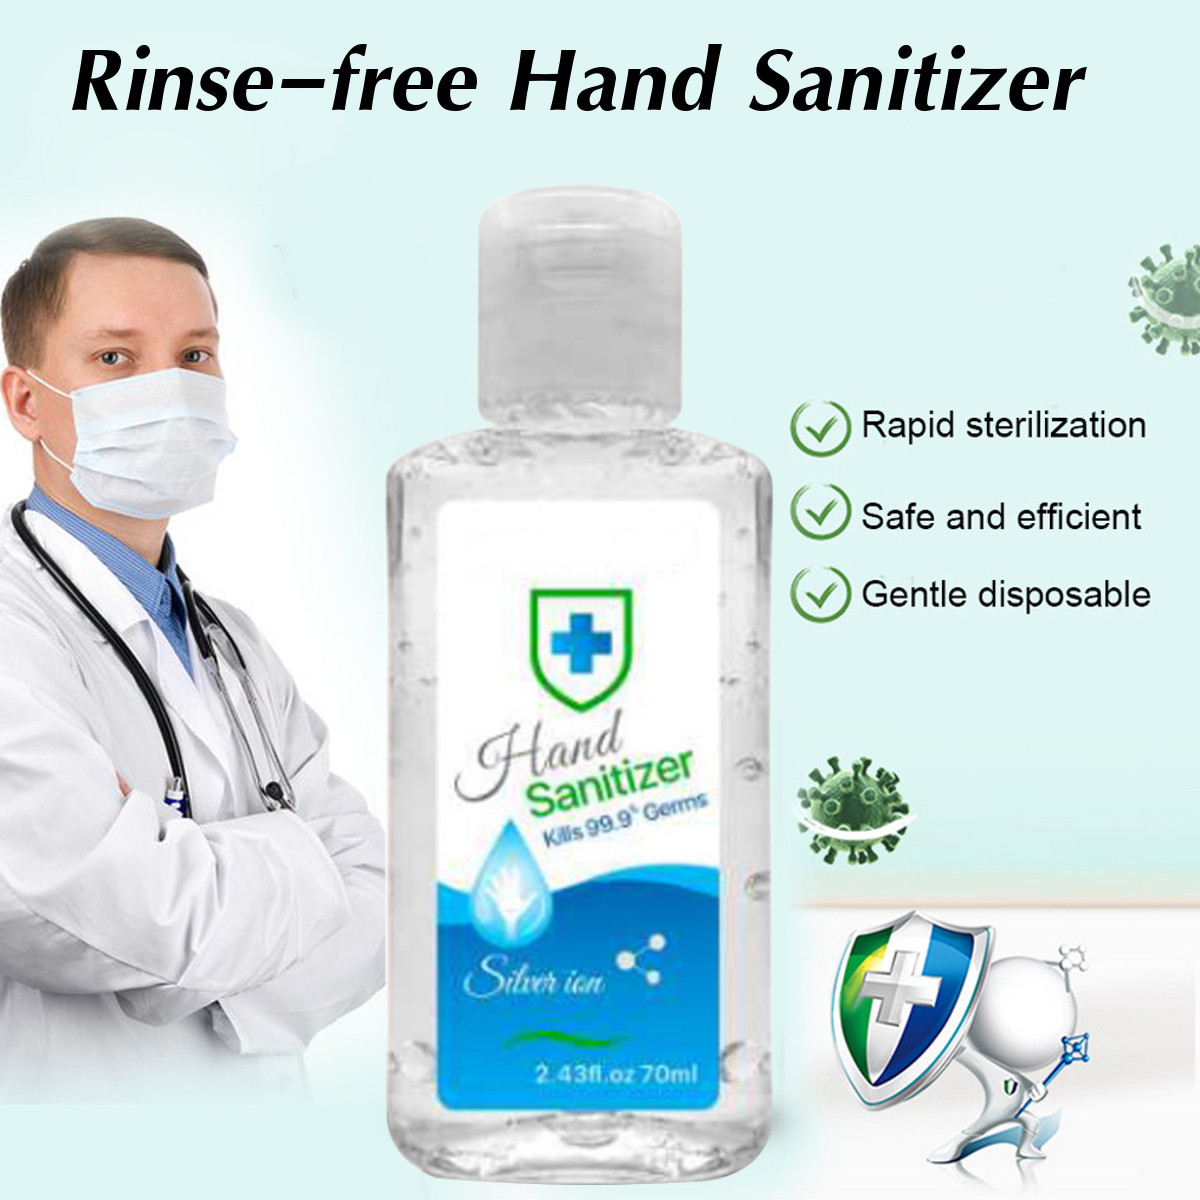 70ML-Rinse-free-Hand-Sanitizer-Gel-Hand-Cleanser-Antibacterial-Kills-999-Germs-Sanitizer-Hand-Soap-1655459-2